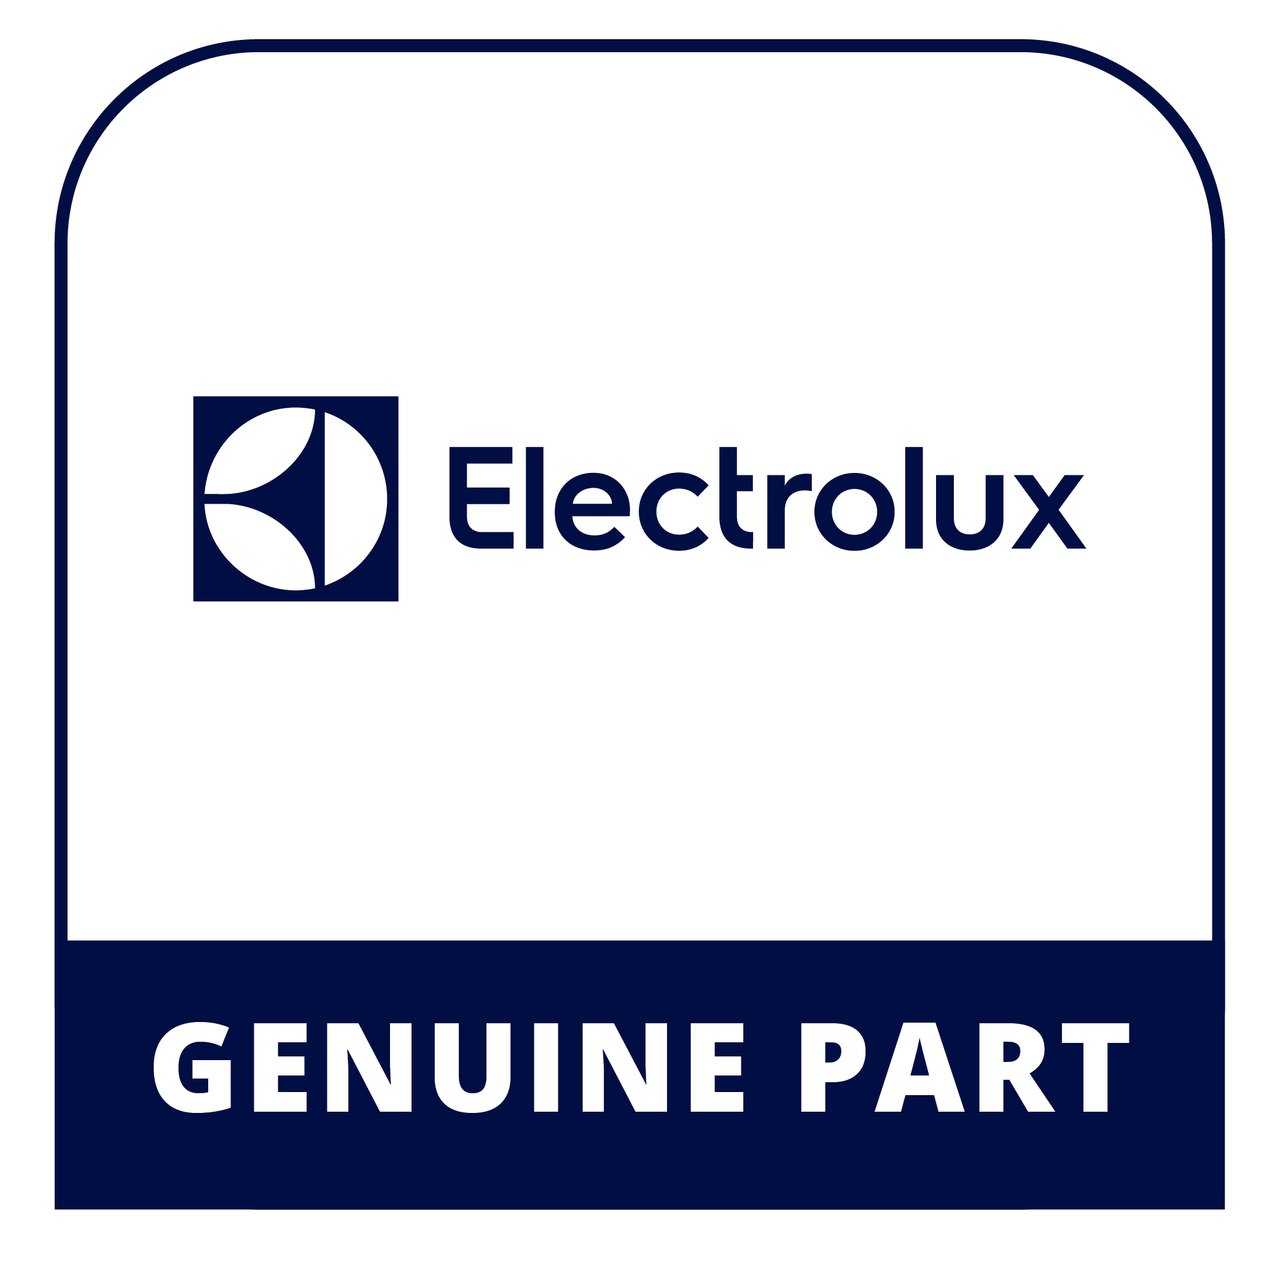 Frigidaire - Electrolux 5304529263 Trim Ring - Genuine Electrolux Part